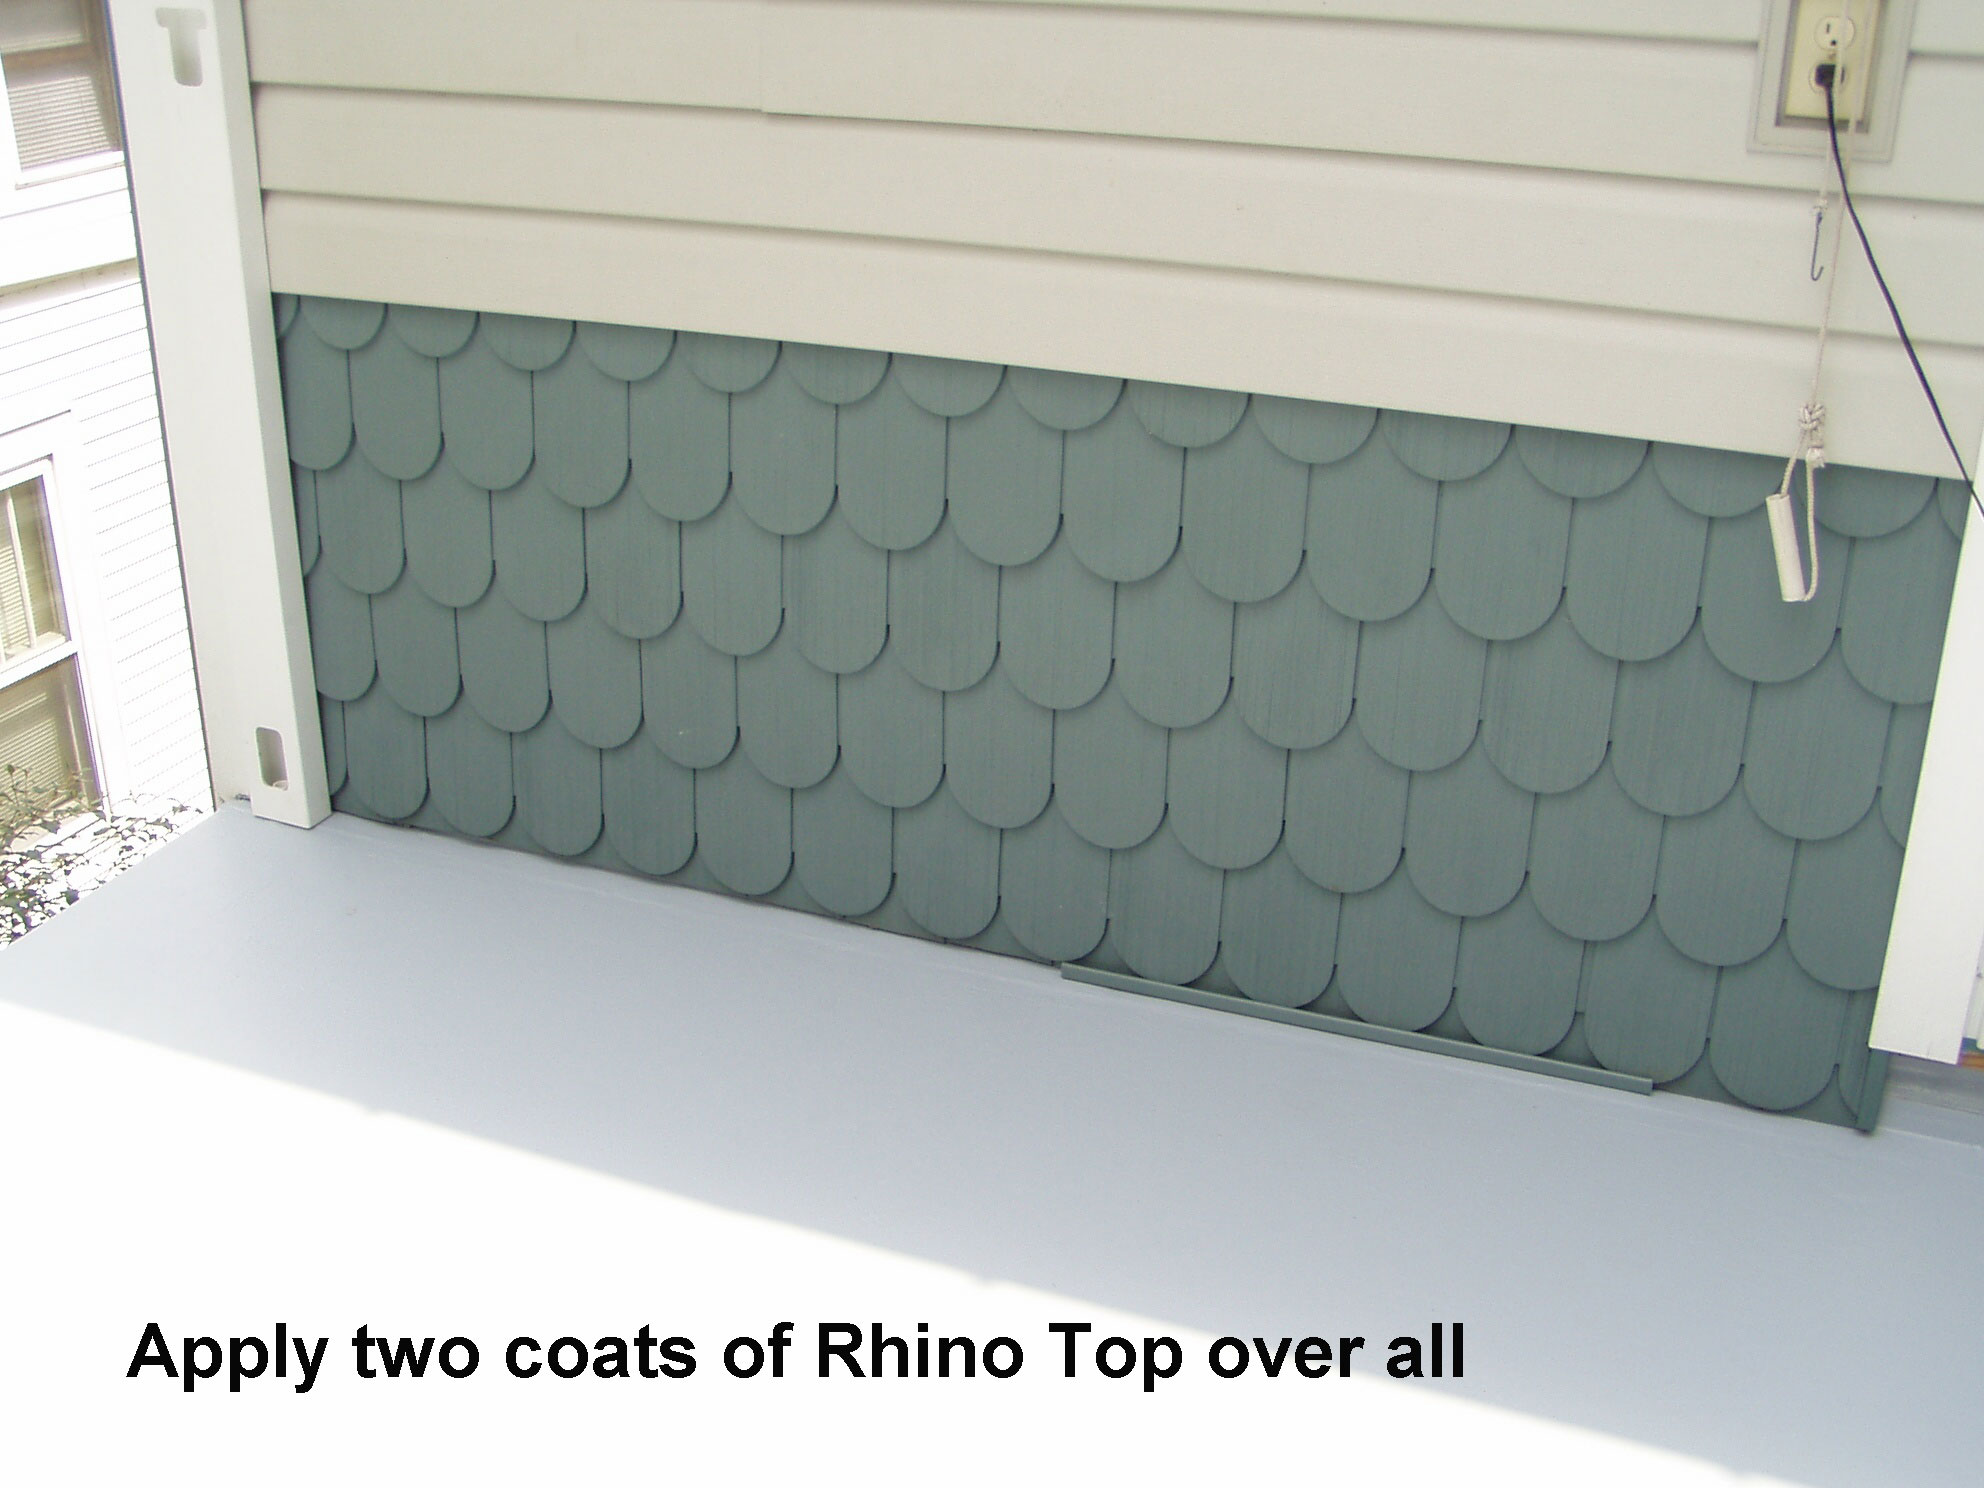 2 coats of Rhino Top